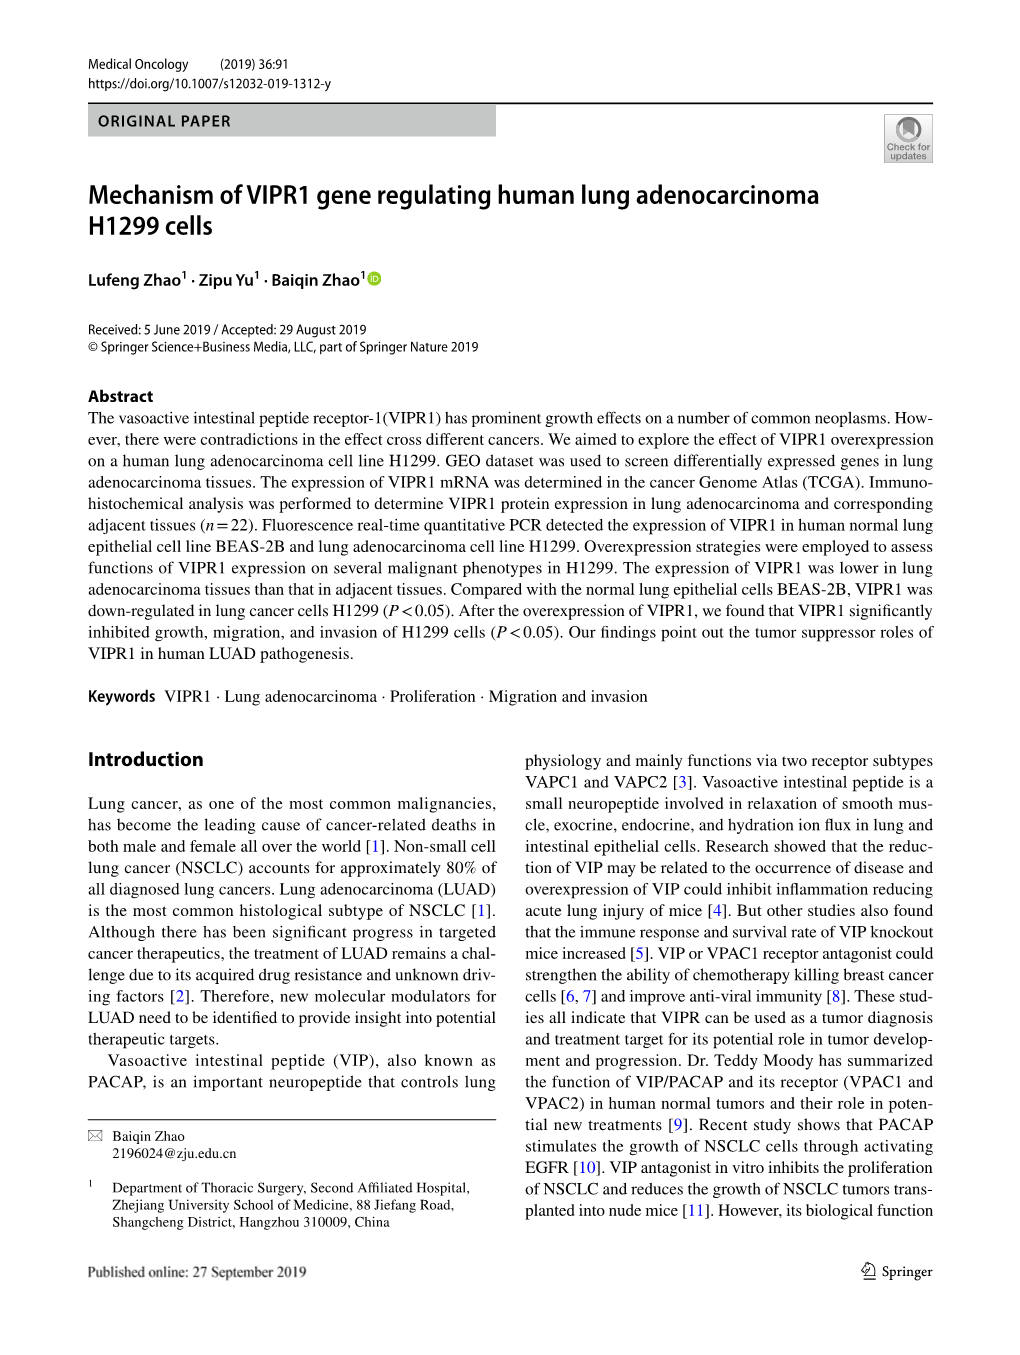 Mechanism of VIPR1 Gene Regulating Human Lung Adenocarcinoma H1299 Cells